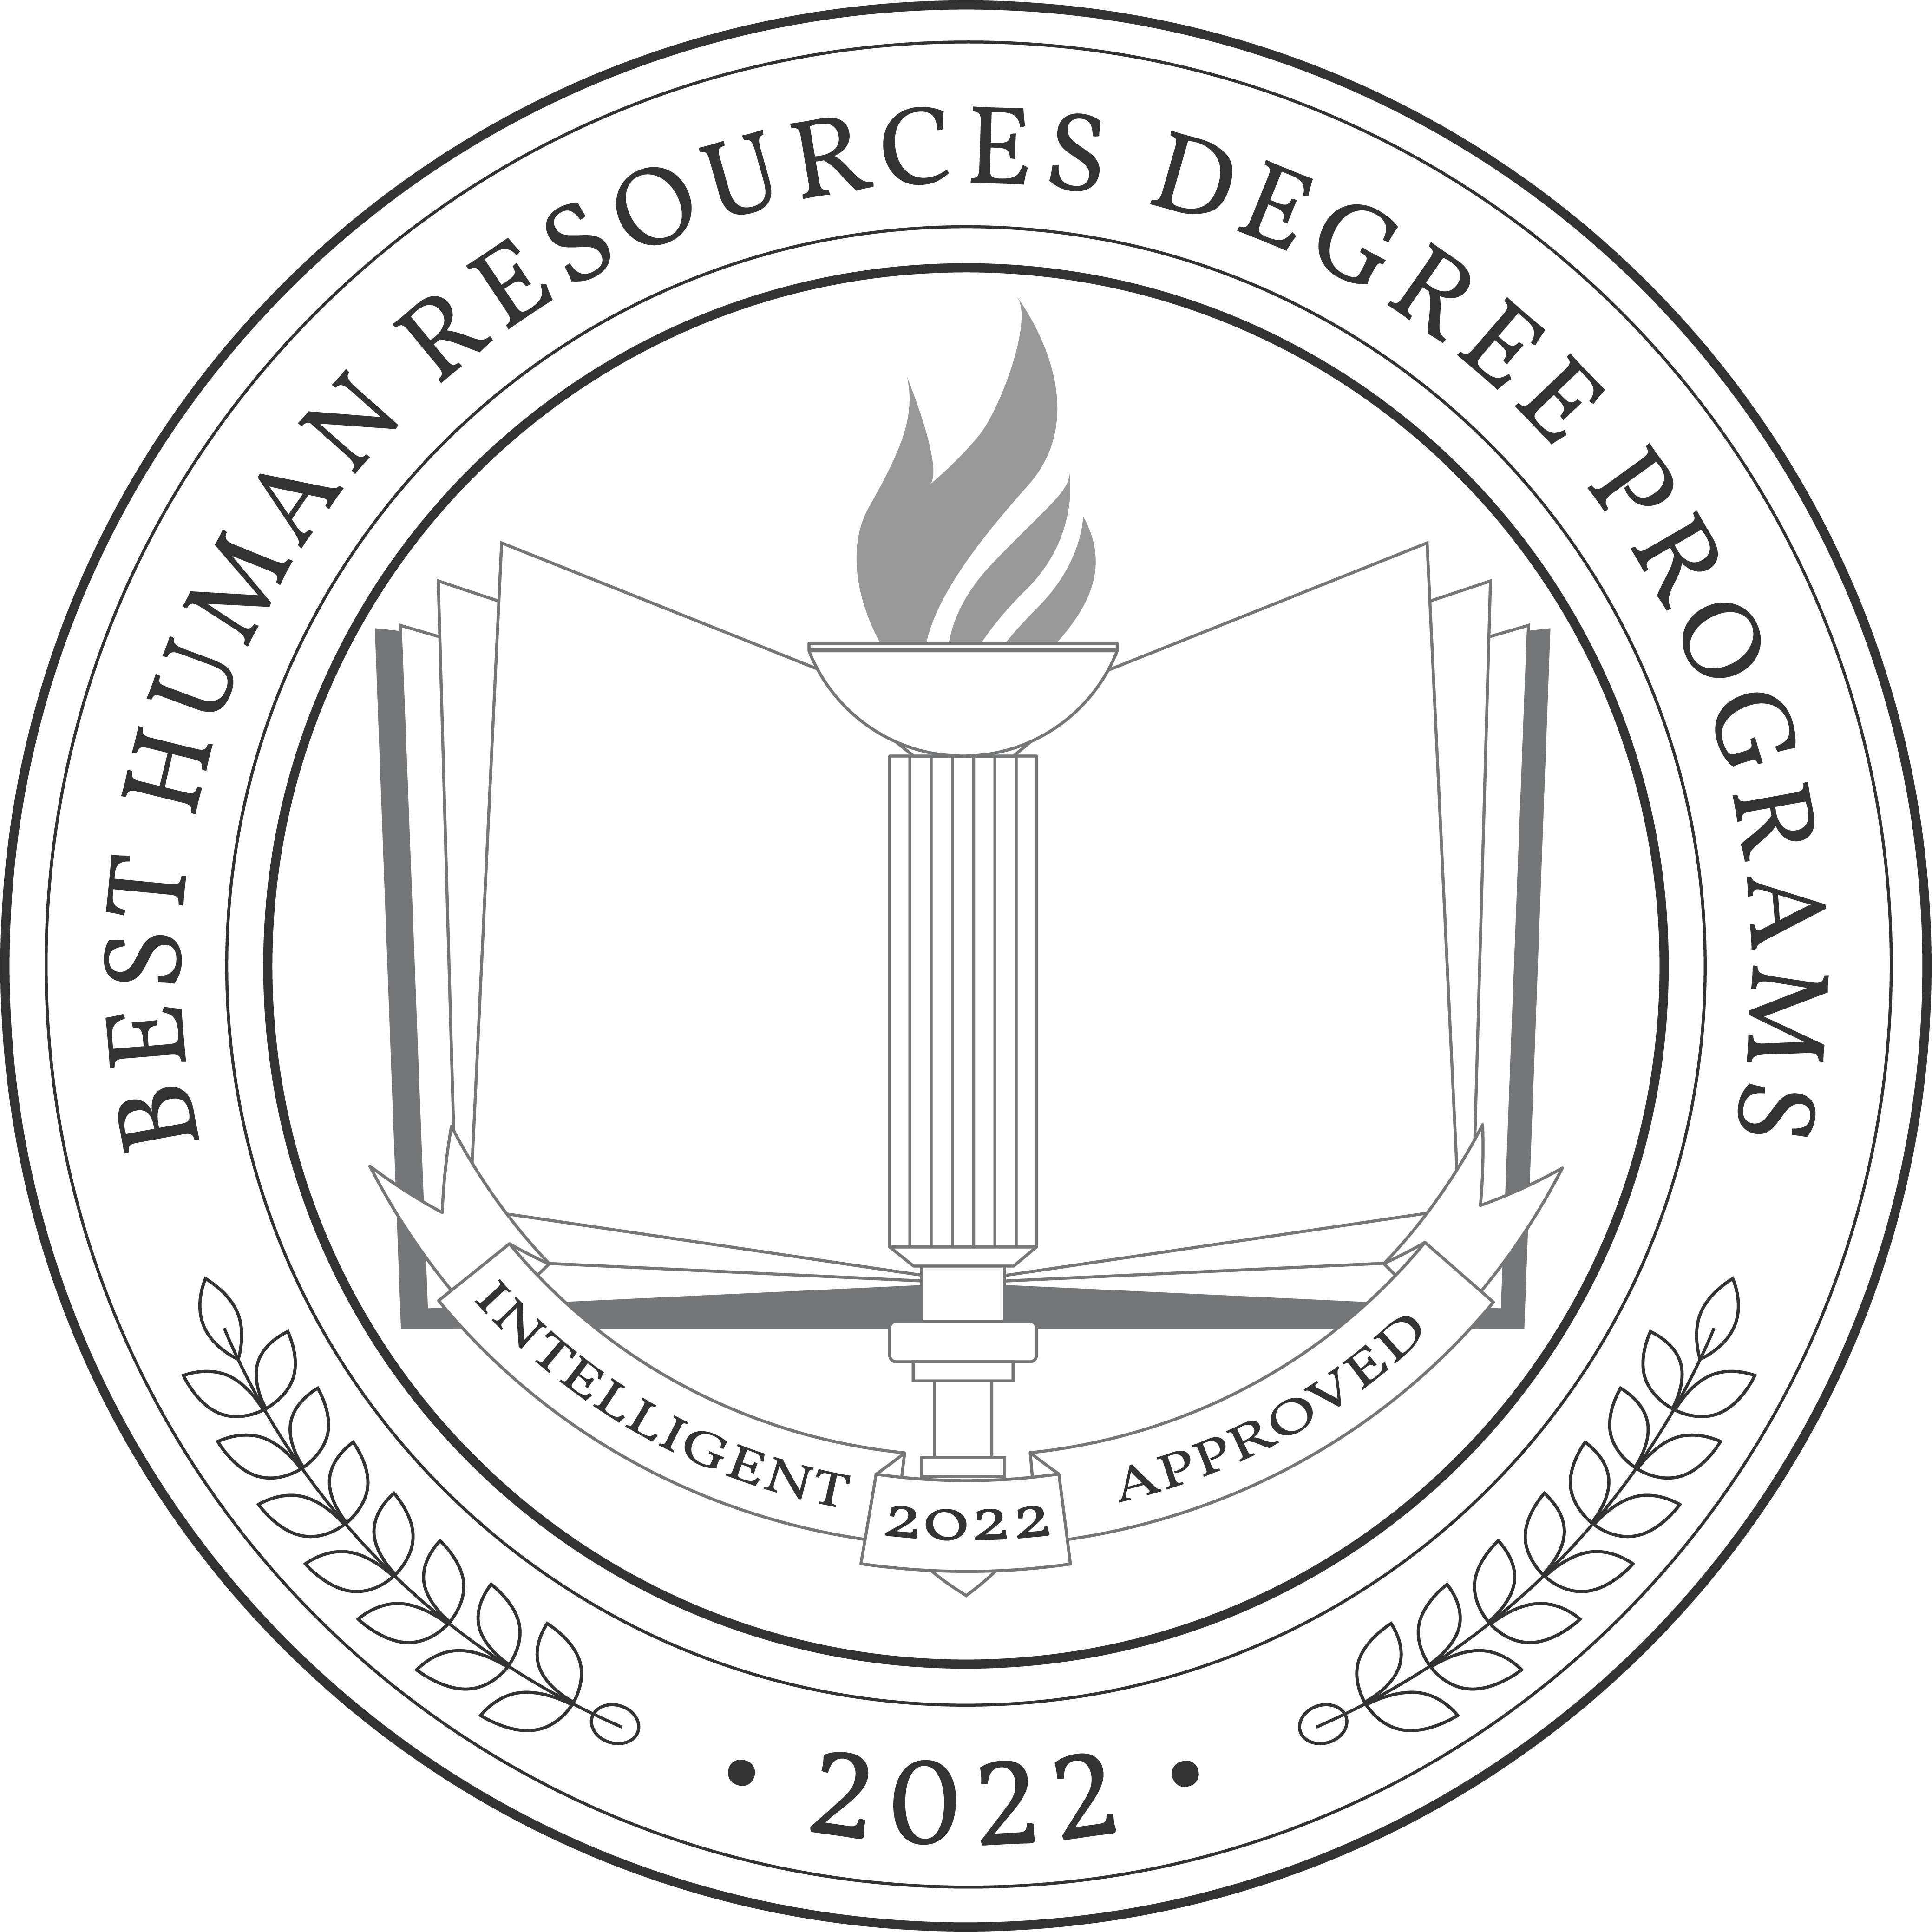 Best Human Resources Degree Programs Badge